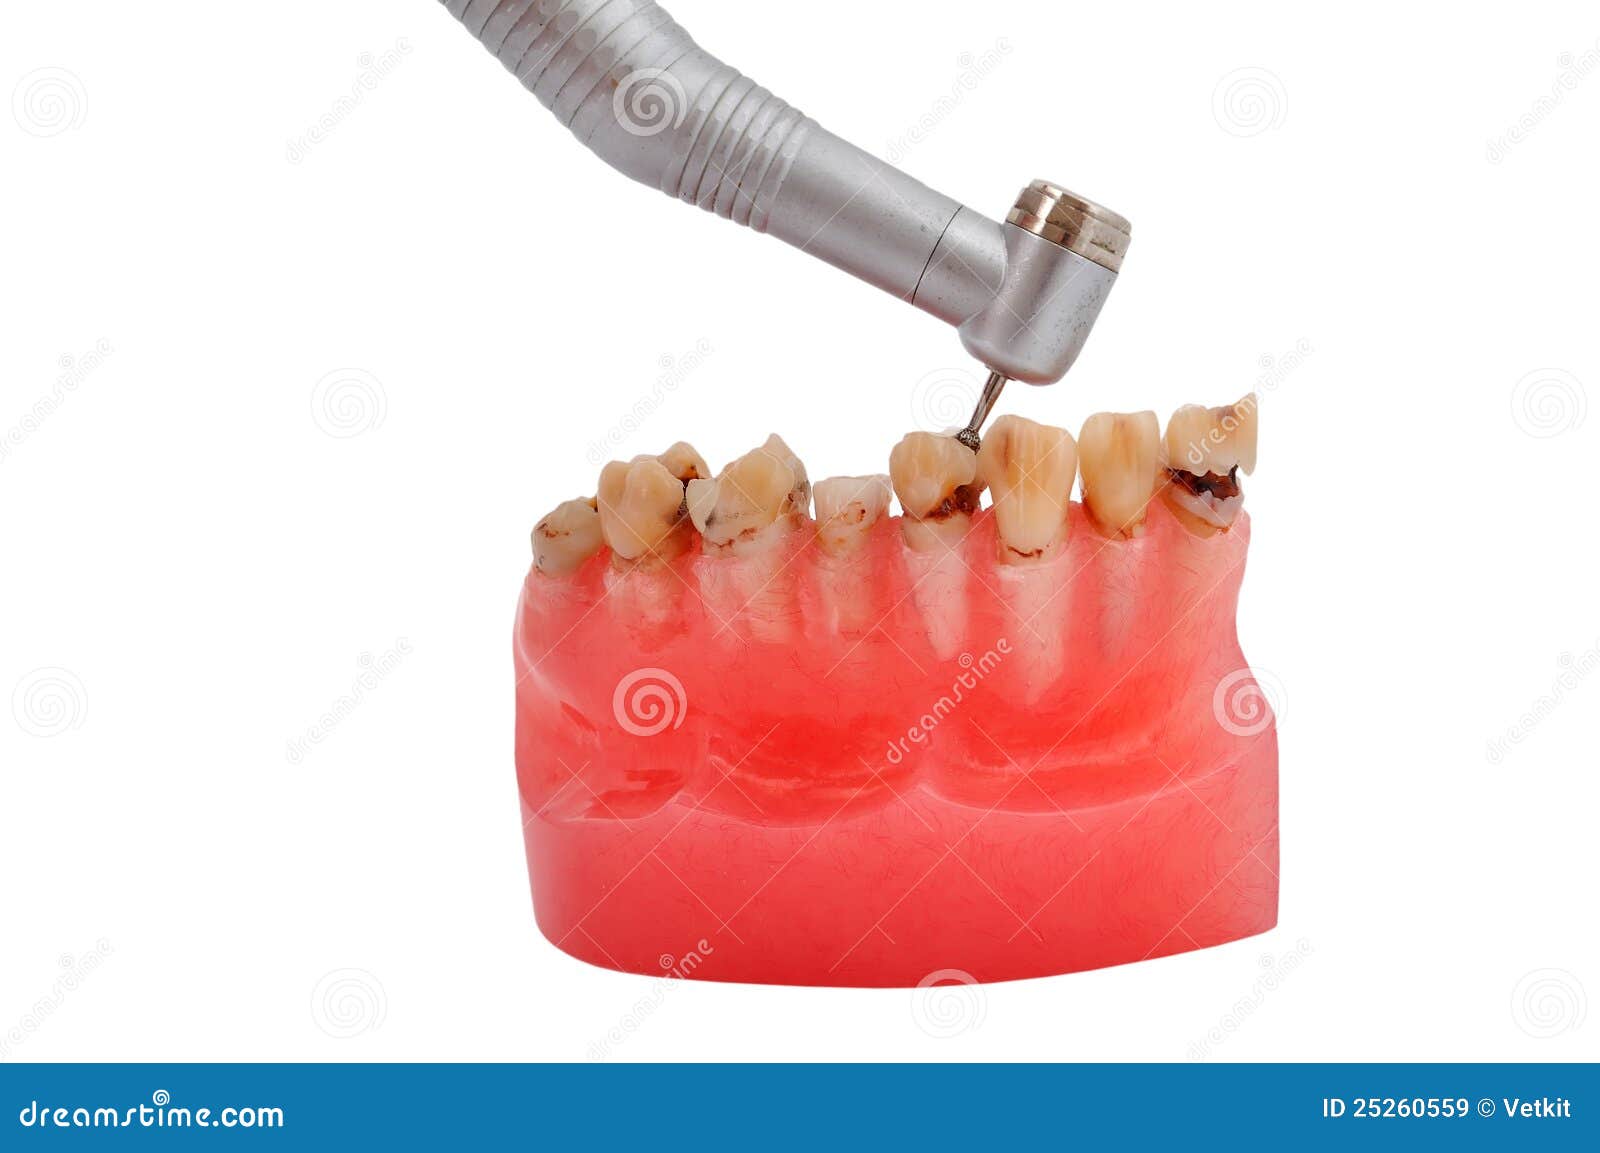 Opening a Dental Equipment Repair & Refinishing Business